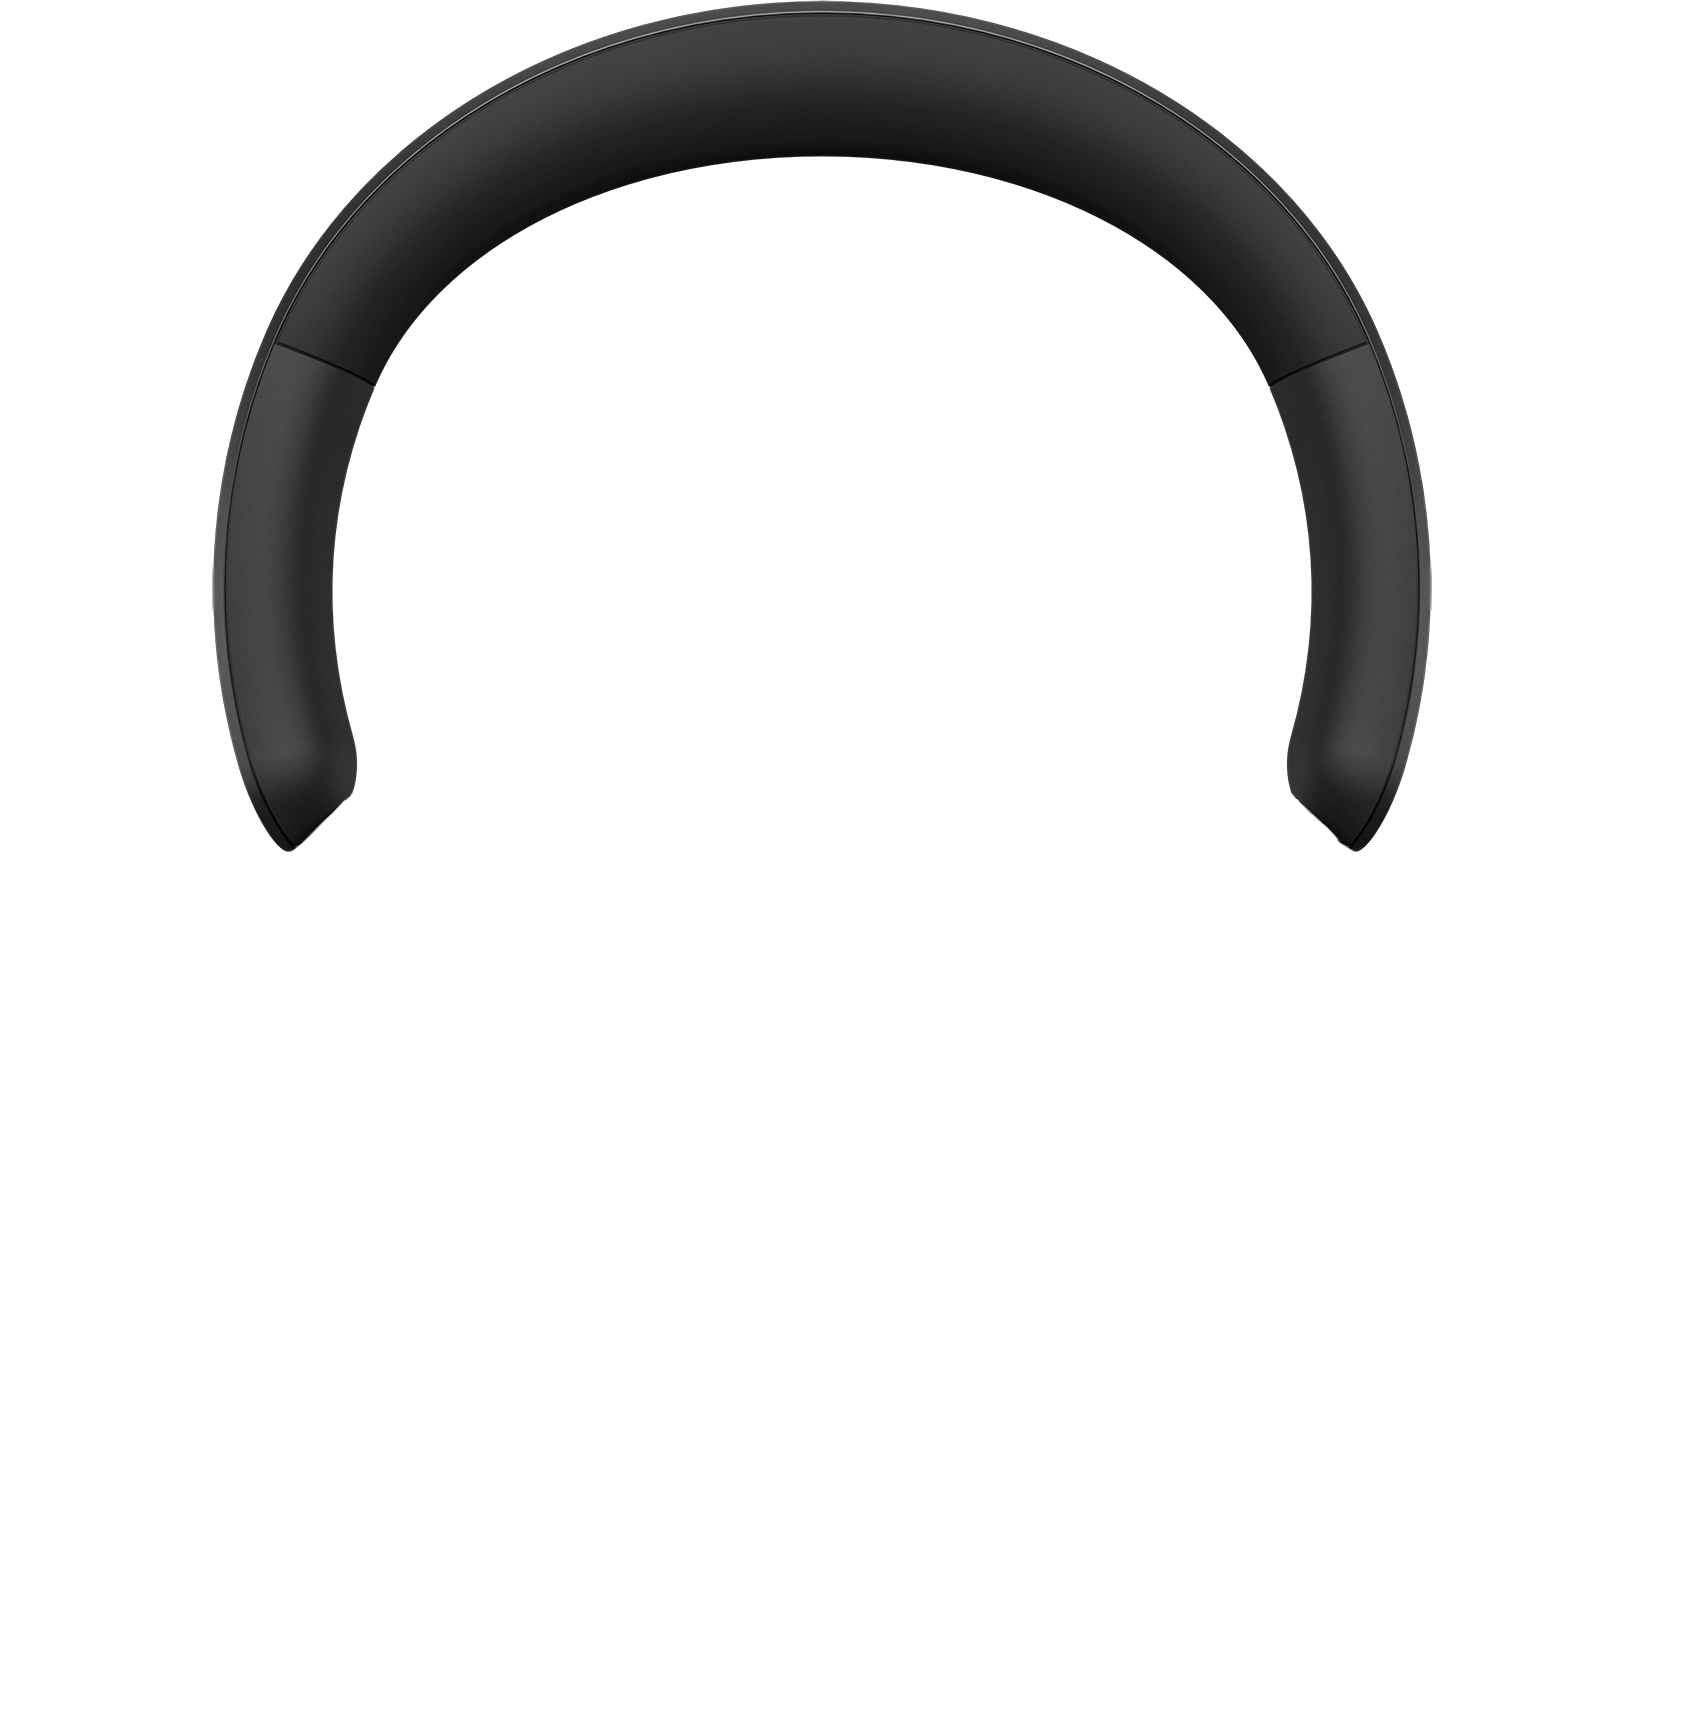 Jabra Elite 45h headphones